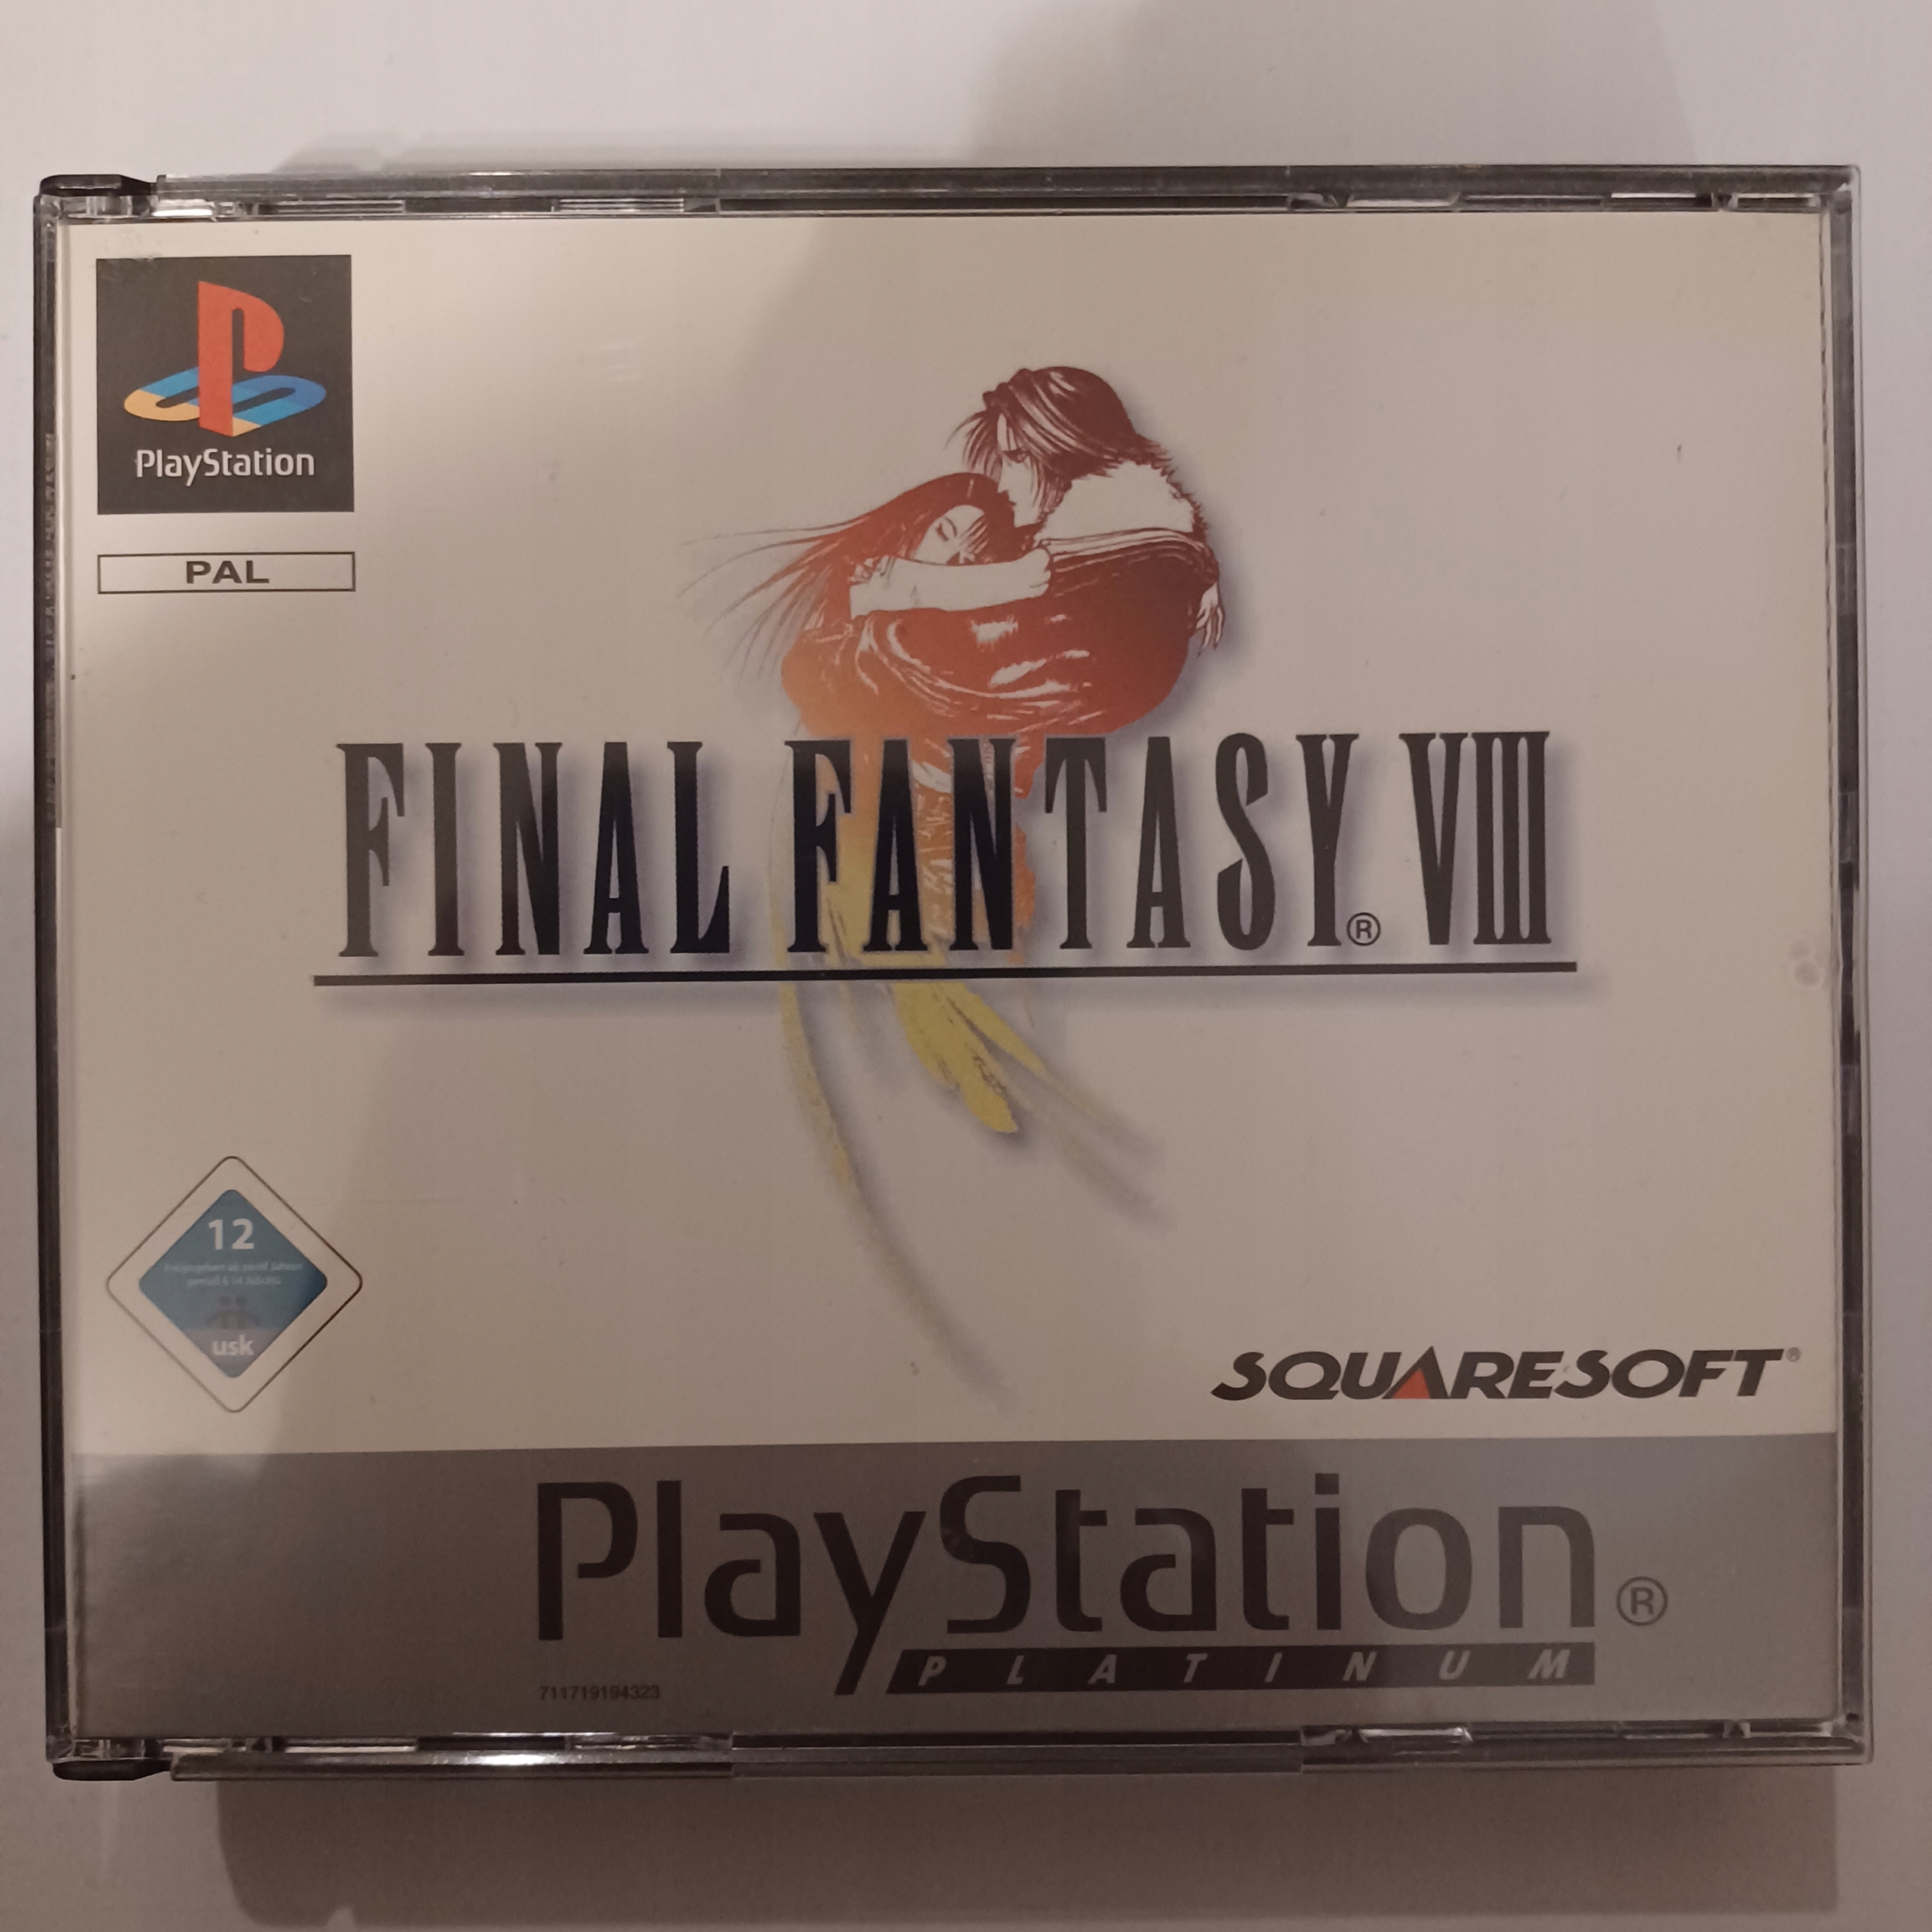 Final Fantasy VIII, PS1, PSX, 3x.